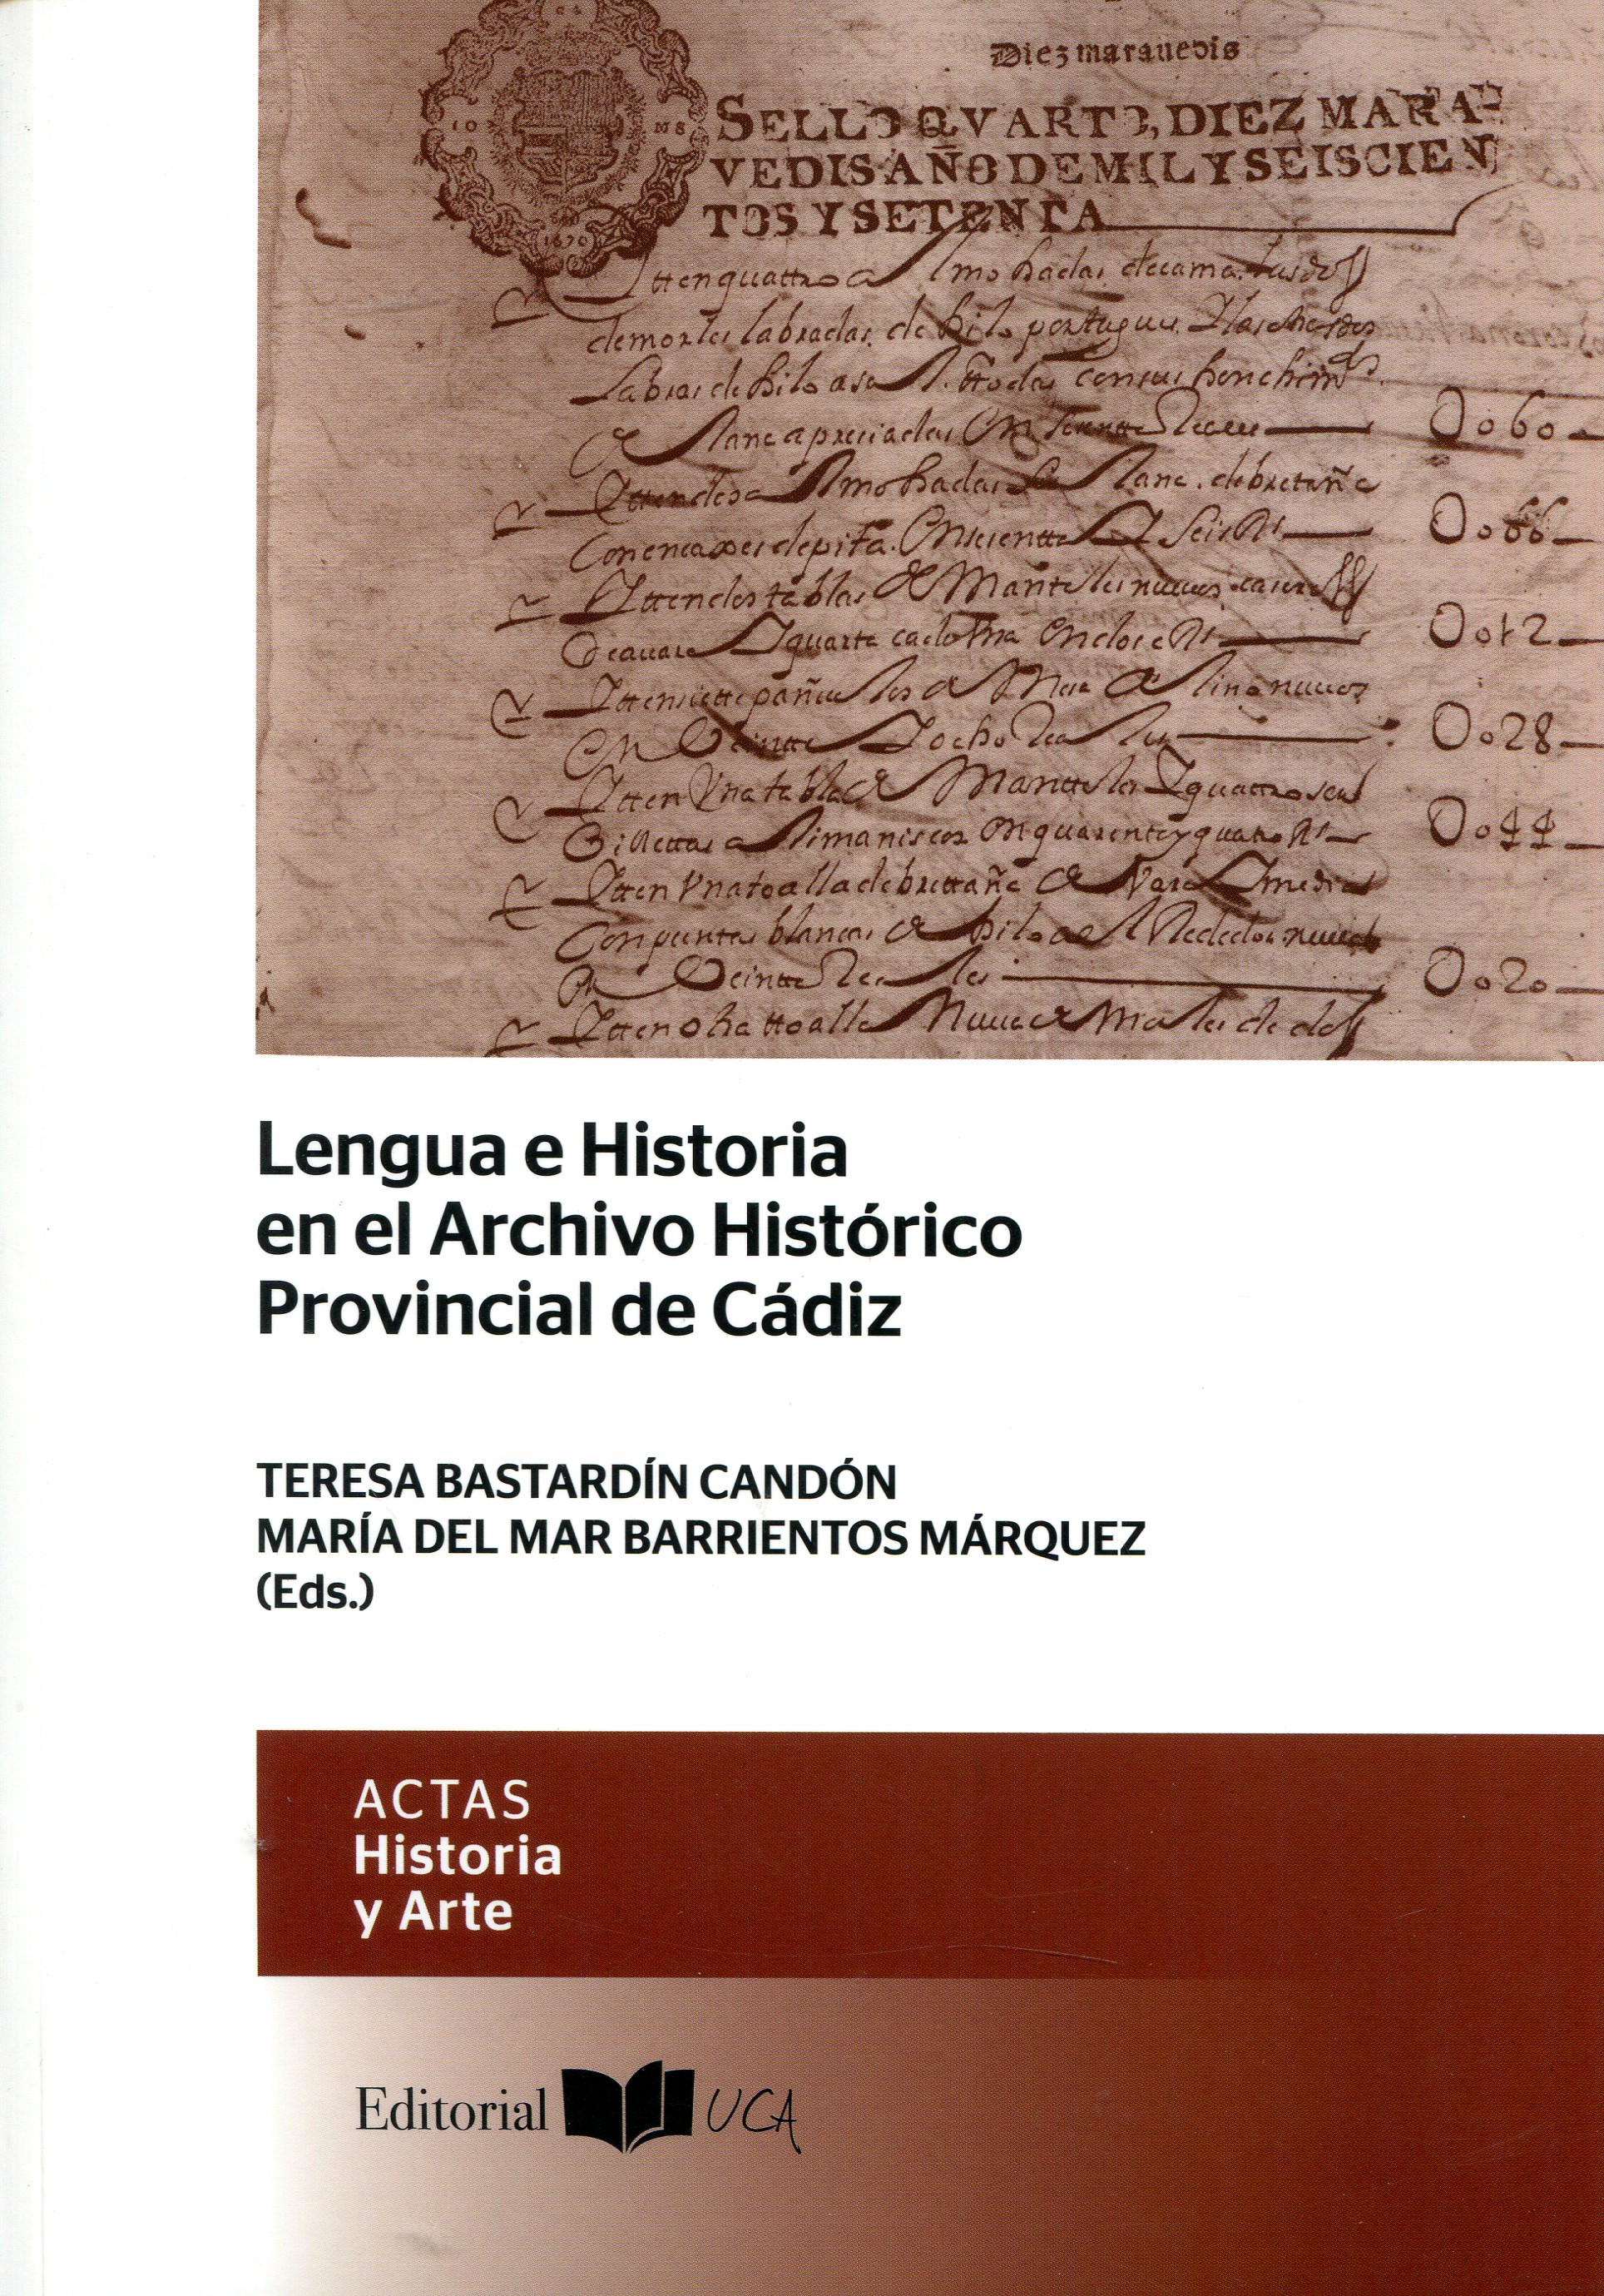 Lengua e Historia en el Archivo Histórico Provincial de Cádiz. 9788498285468